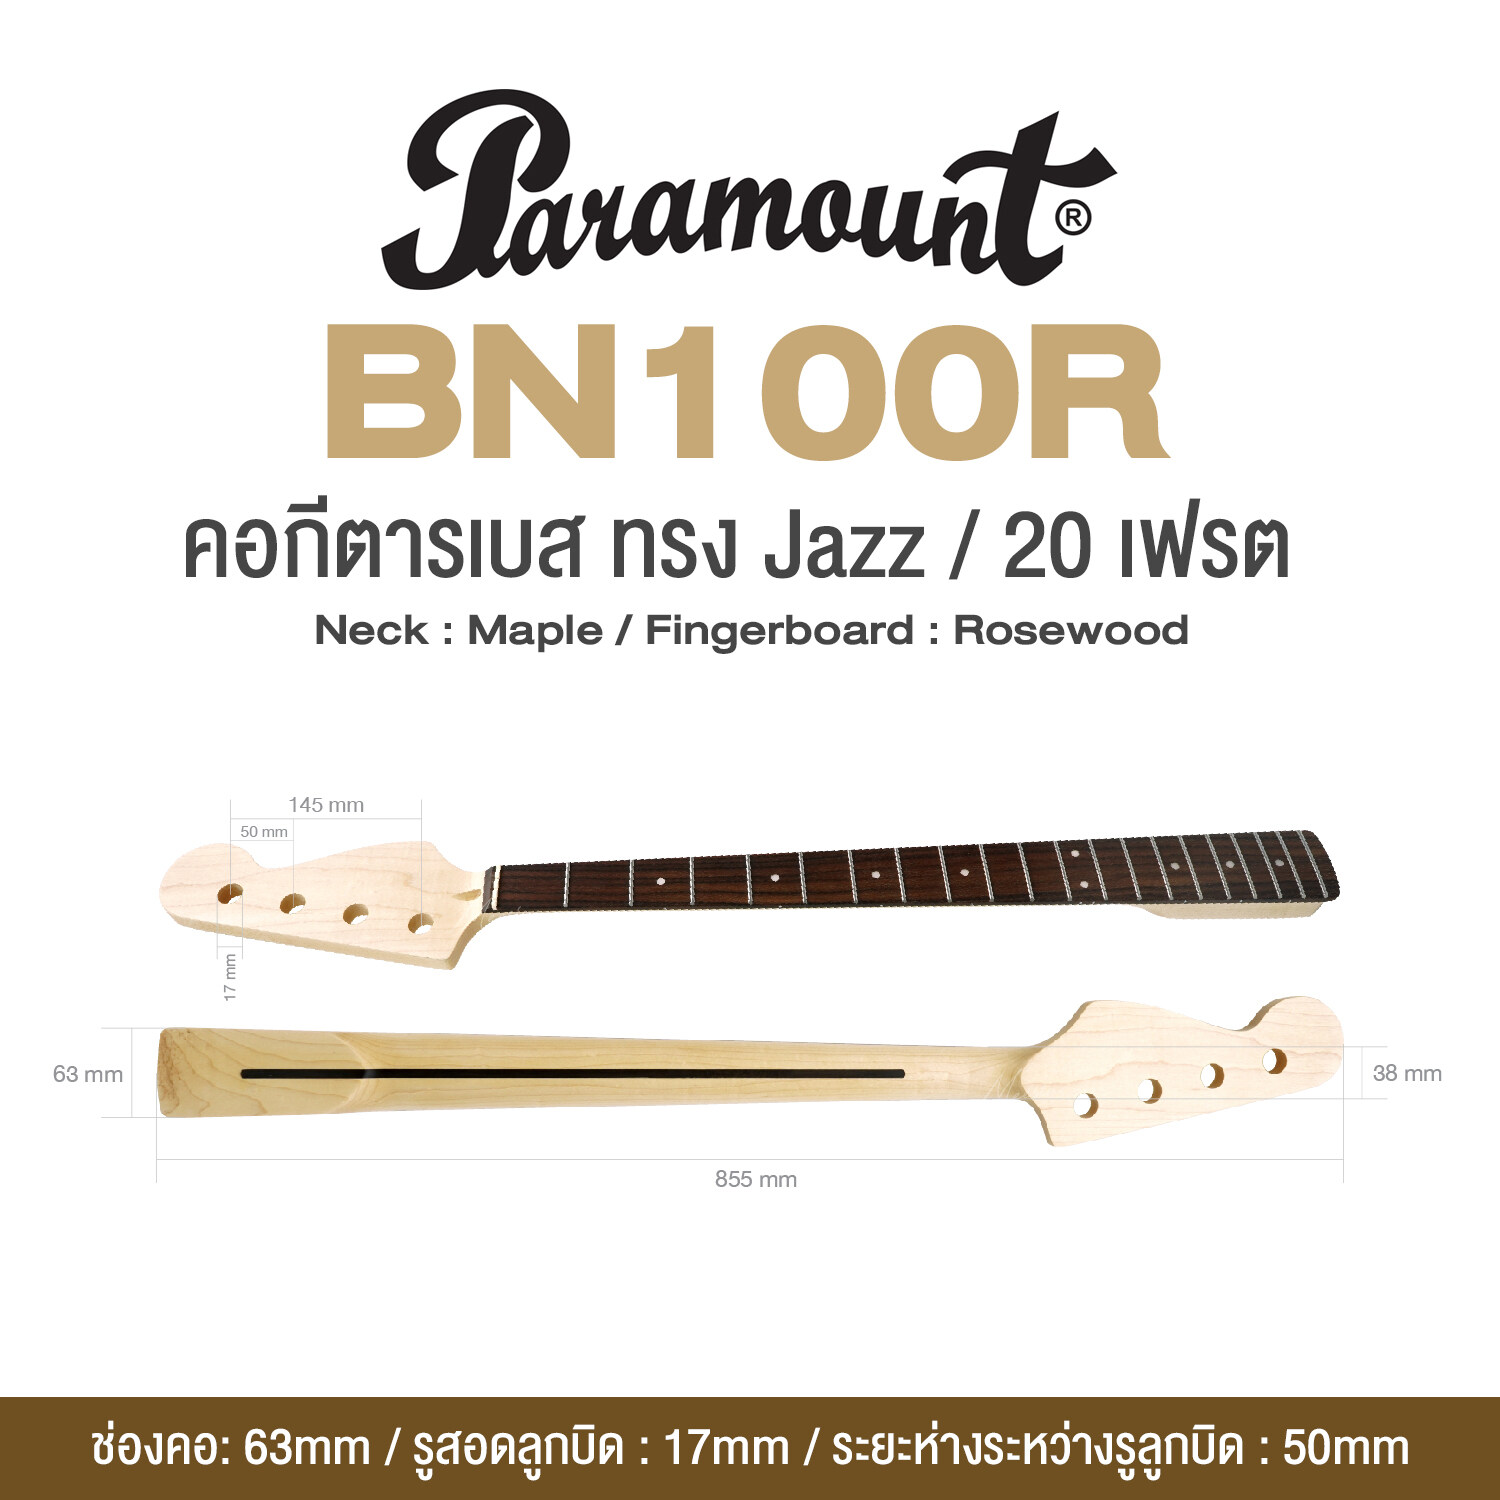 Paramount BN100R